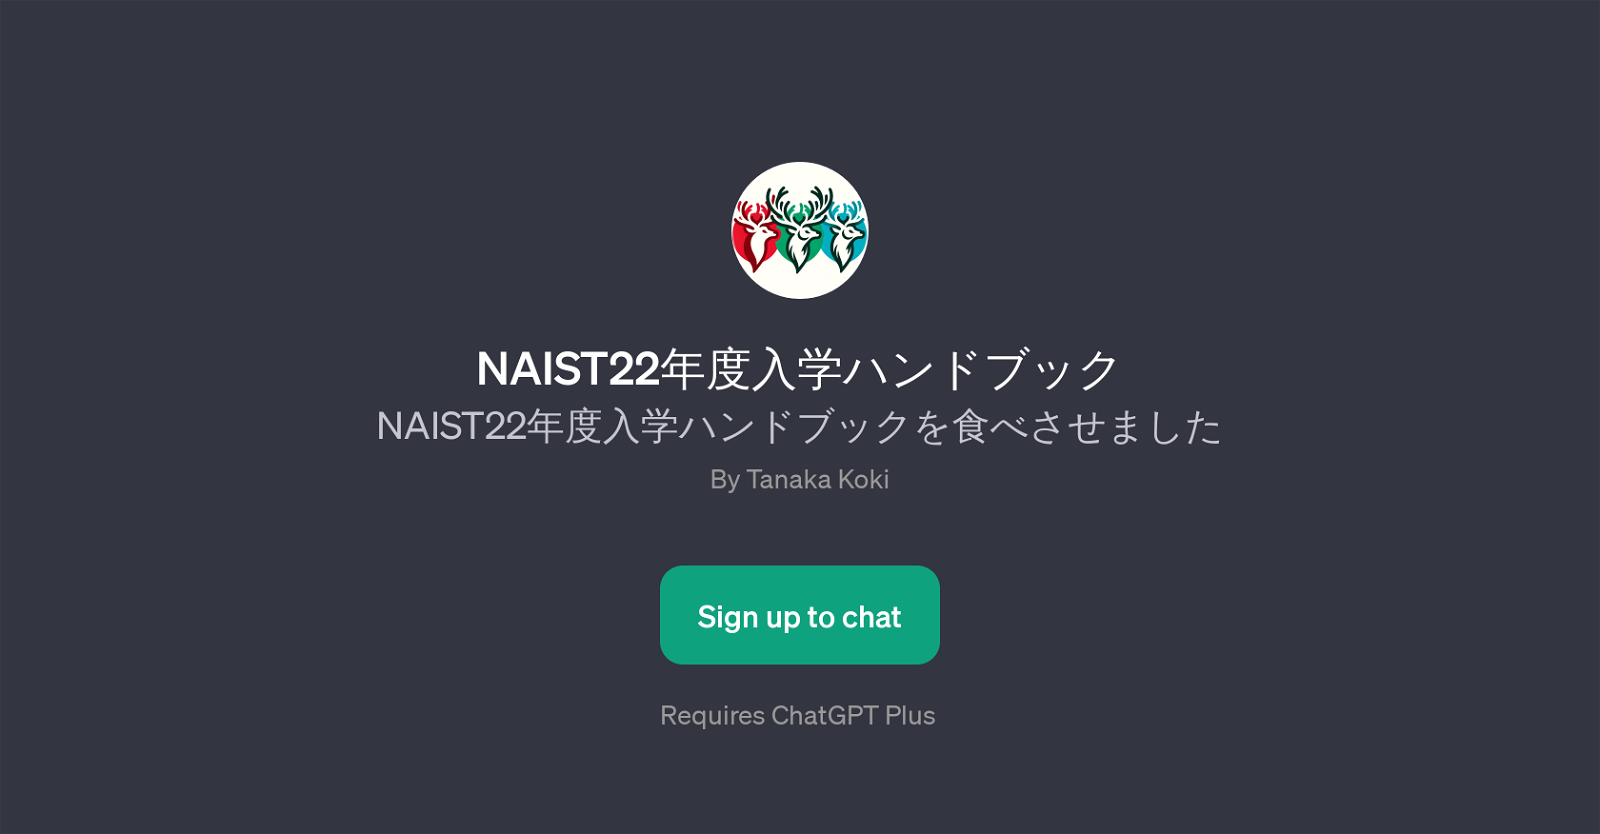 NAIST22 GPT website